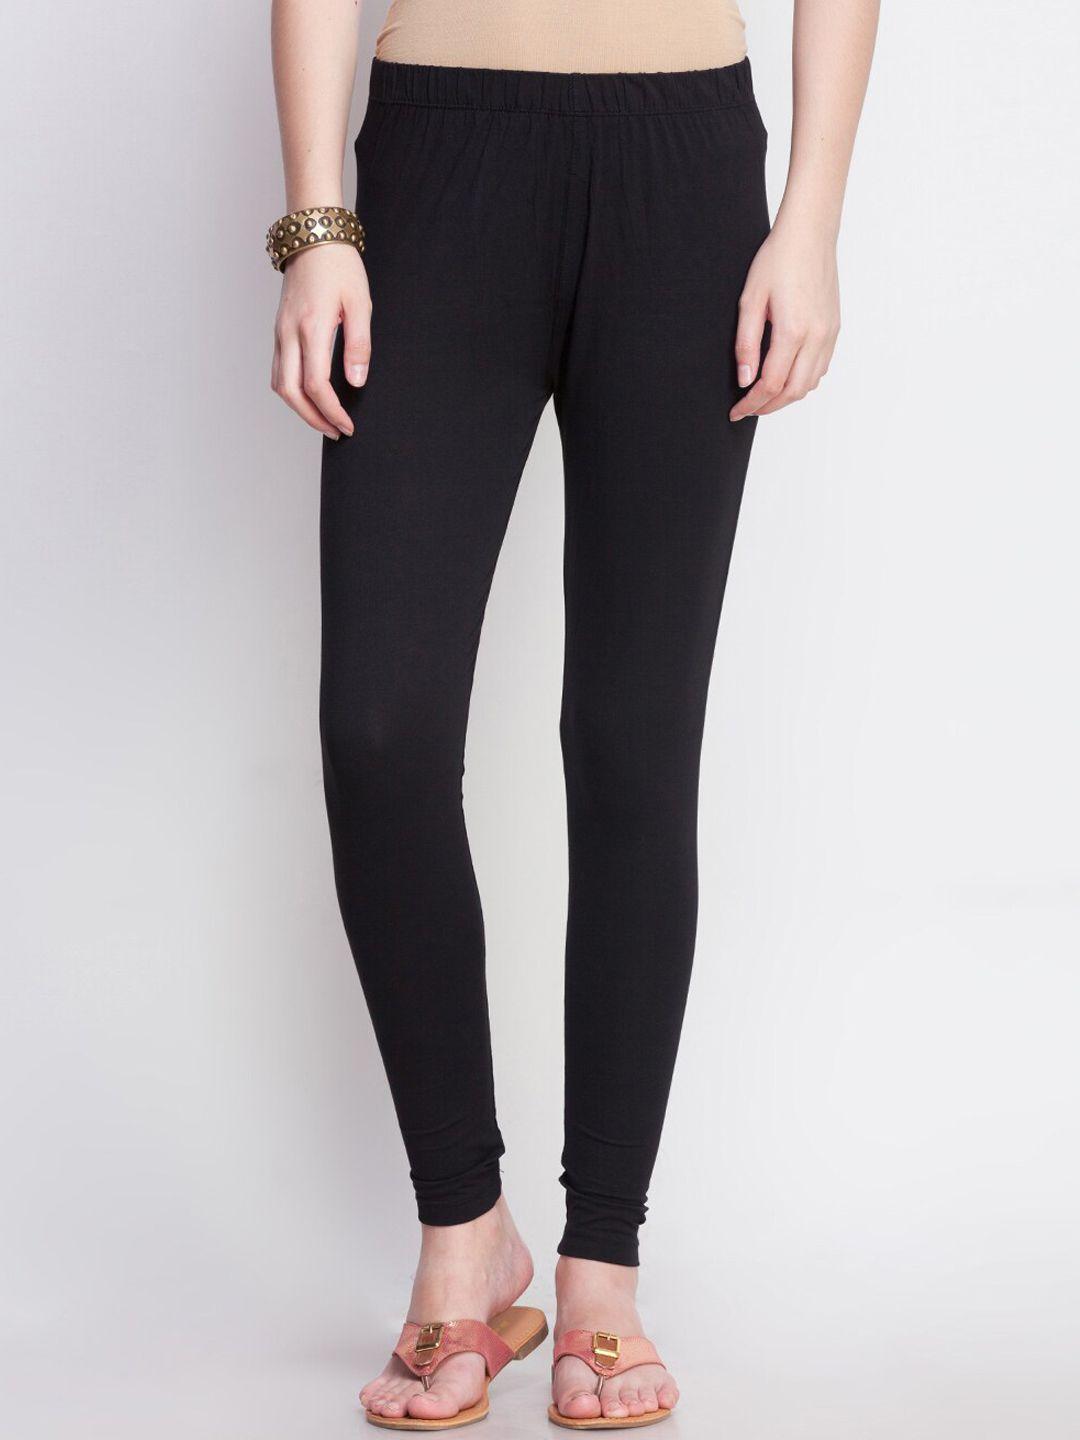 dollar-missy-women-black-solid-cotton-slim-fit-ankle-length-leggings